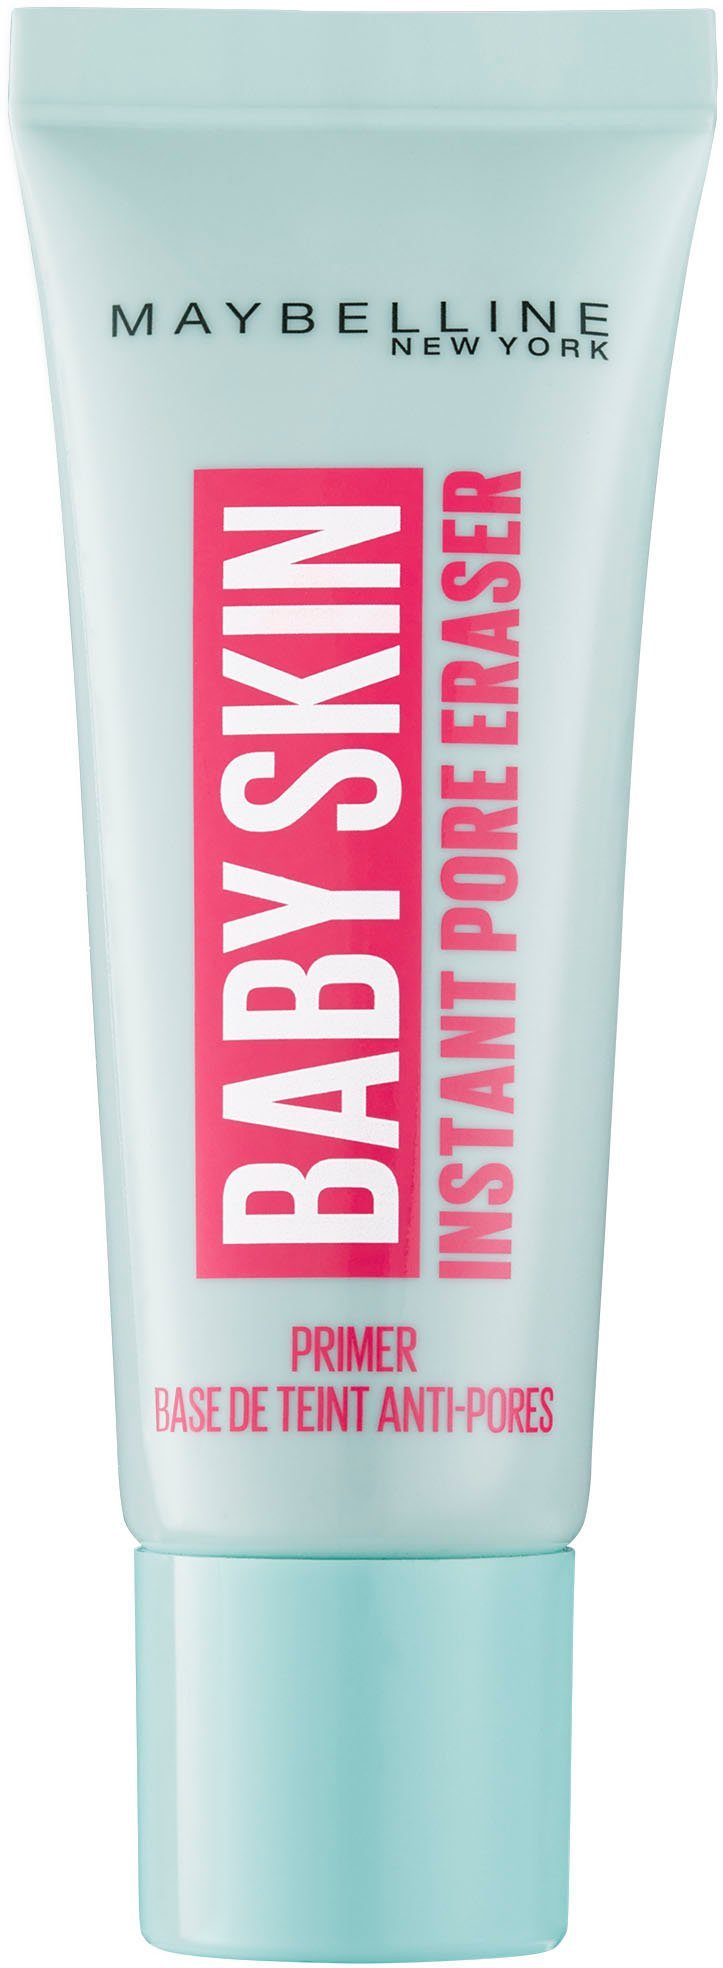 Skin Baby NEW Primer MAYBELLINE YORK